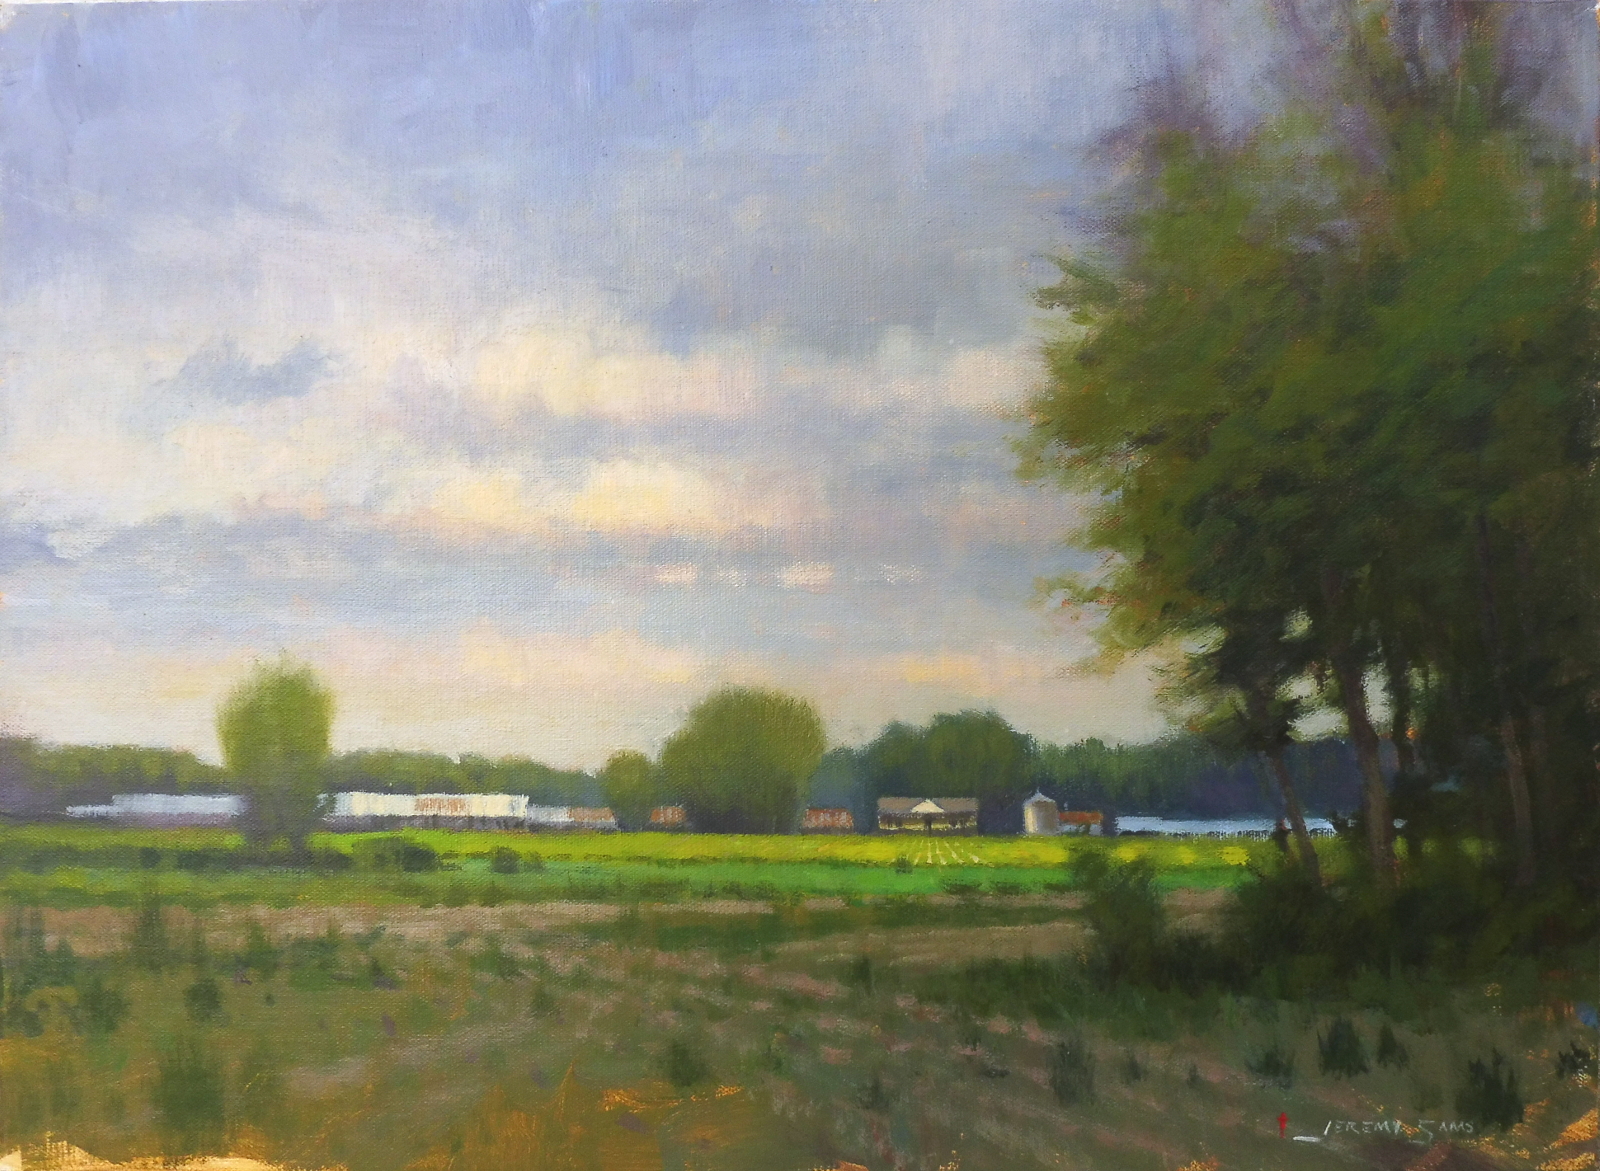 plein air painting of green fields near Kinston by North Carolina artist Jeremy Sams